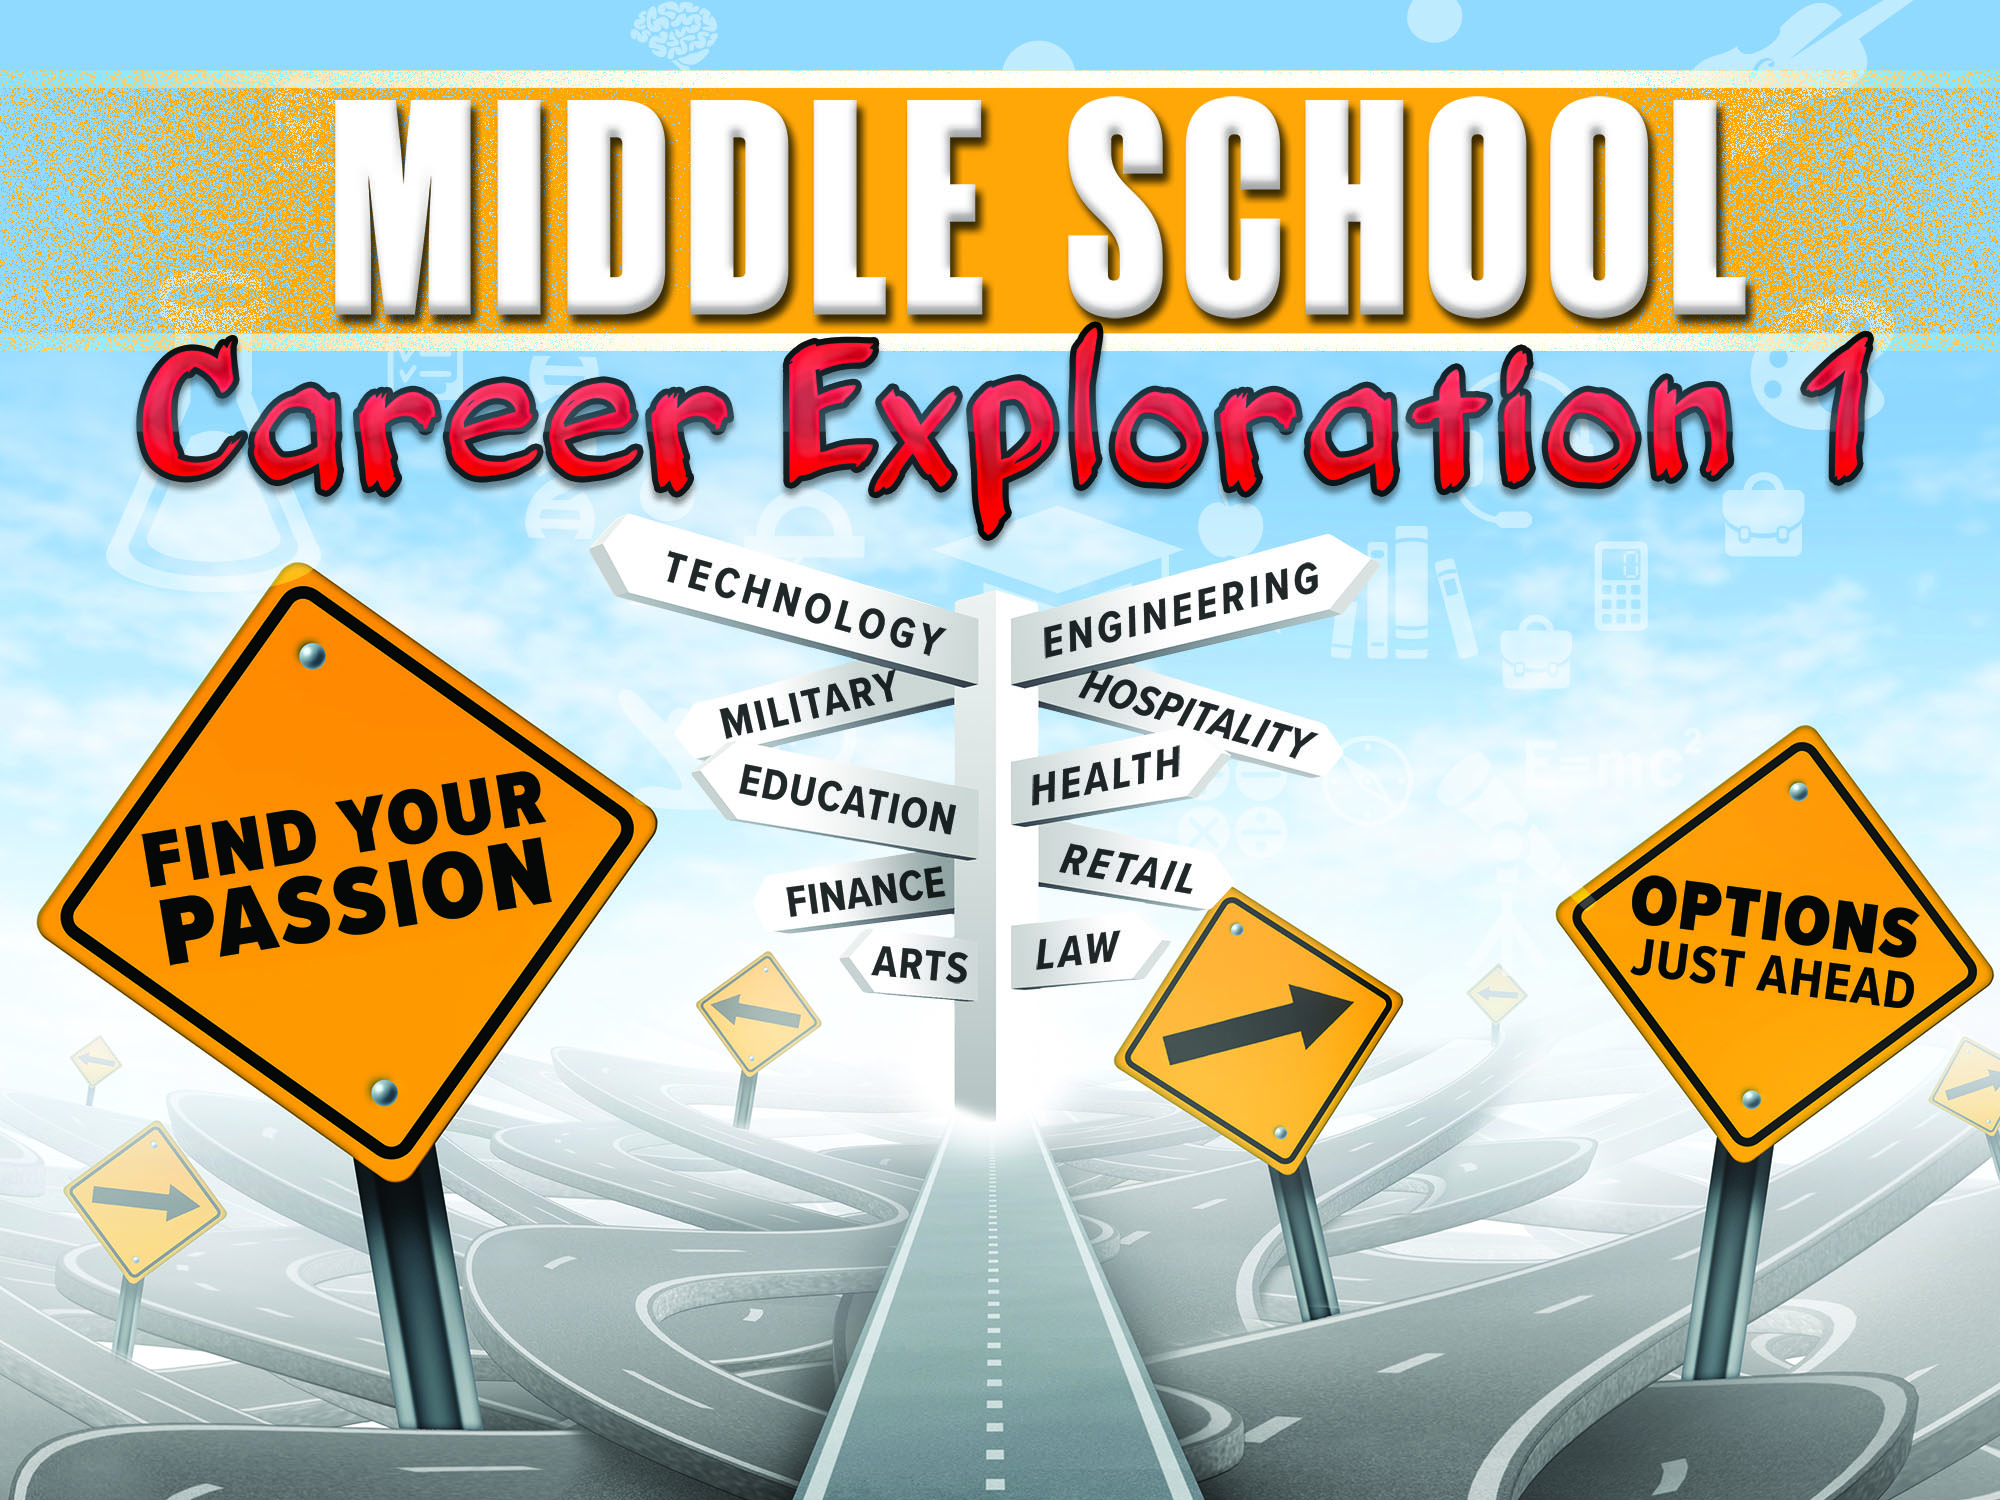 Middle School Career Exploration 1